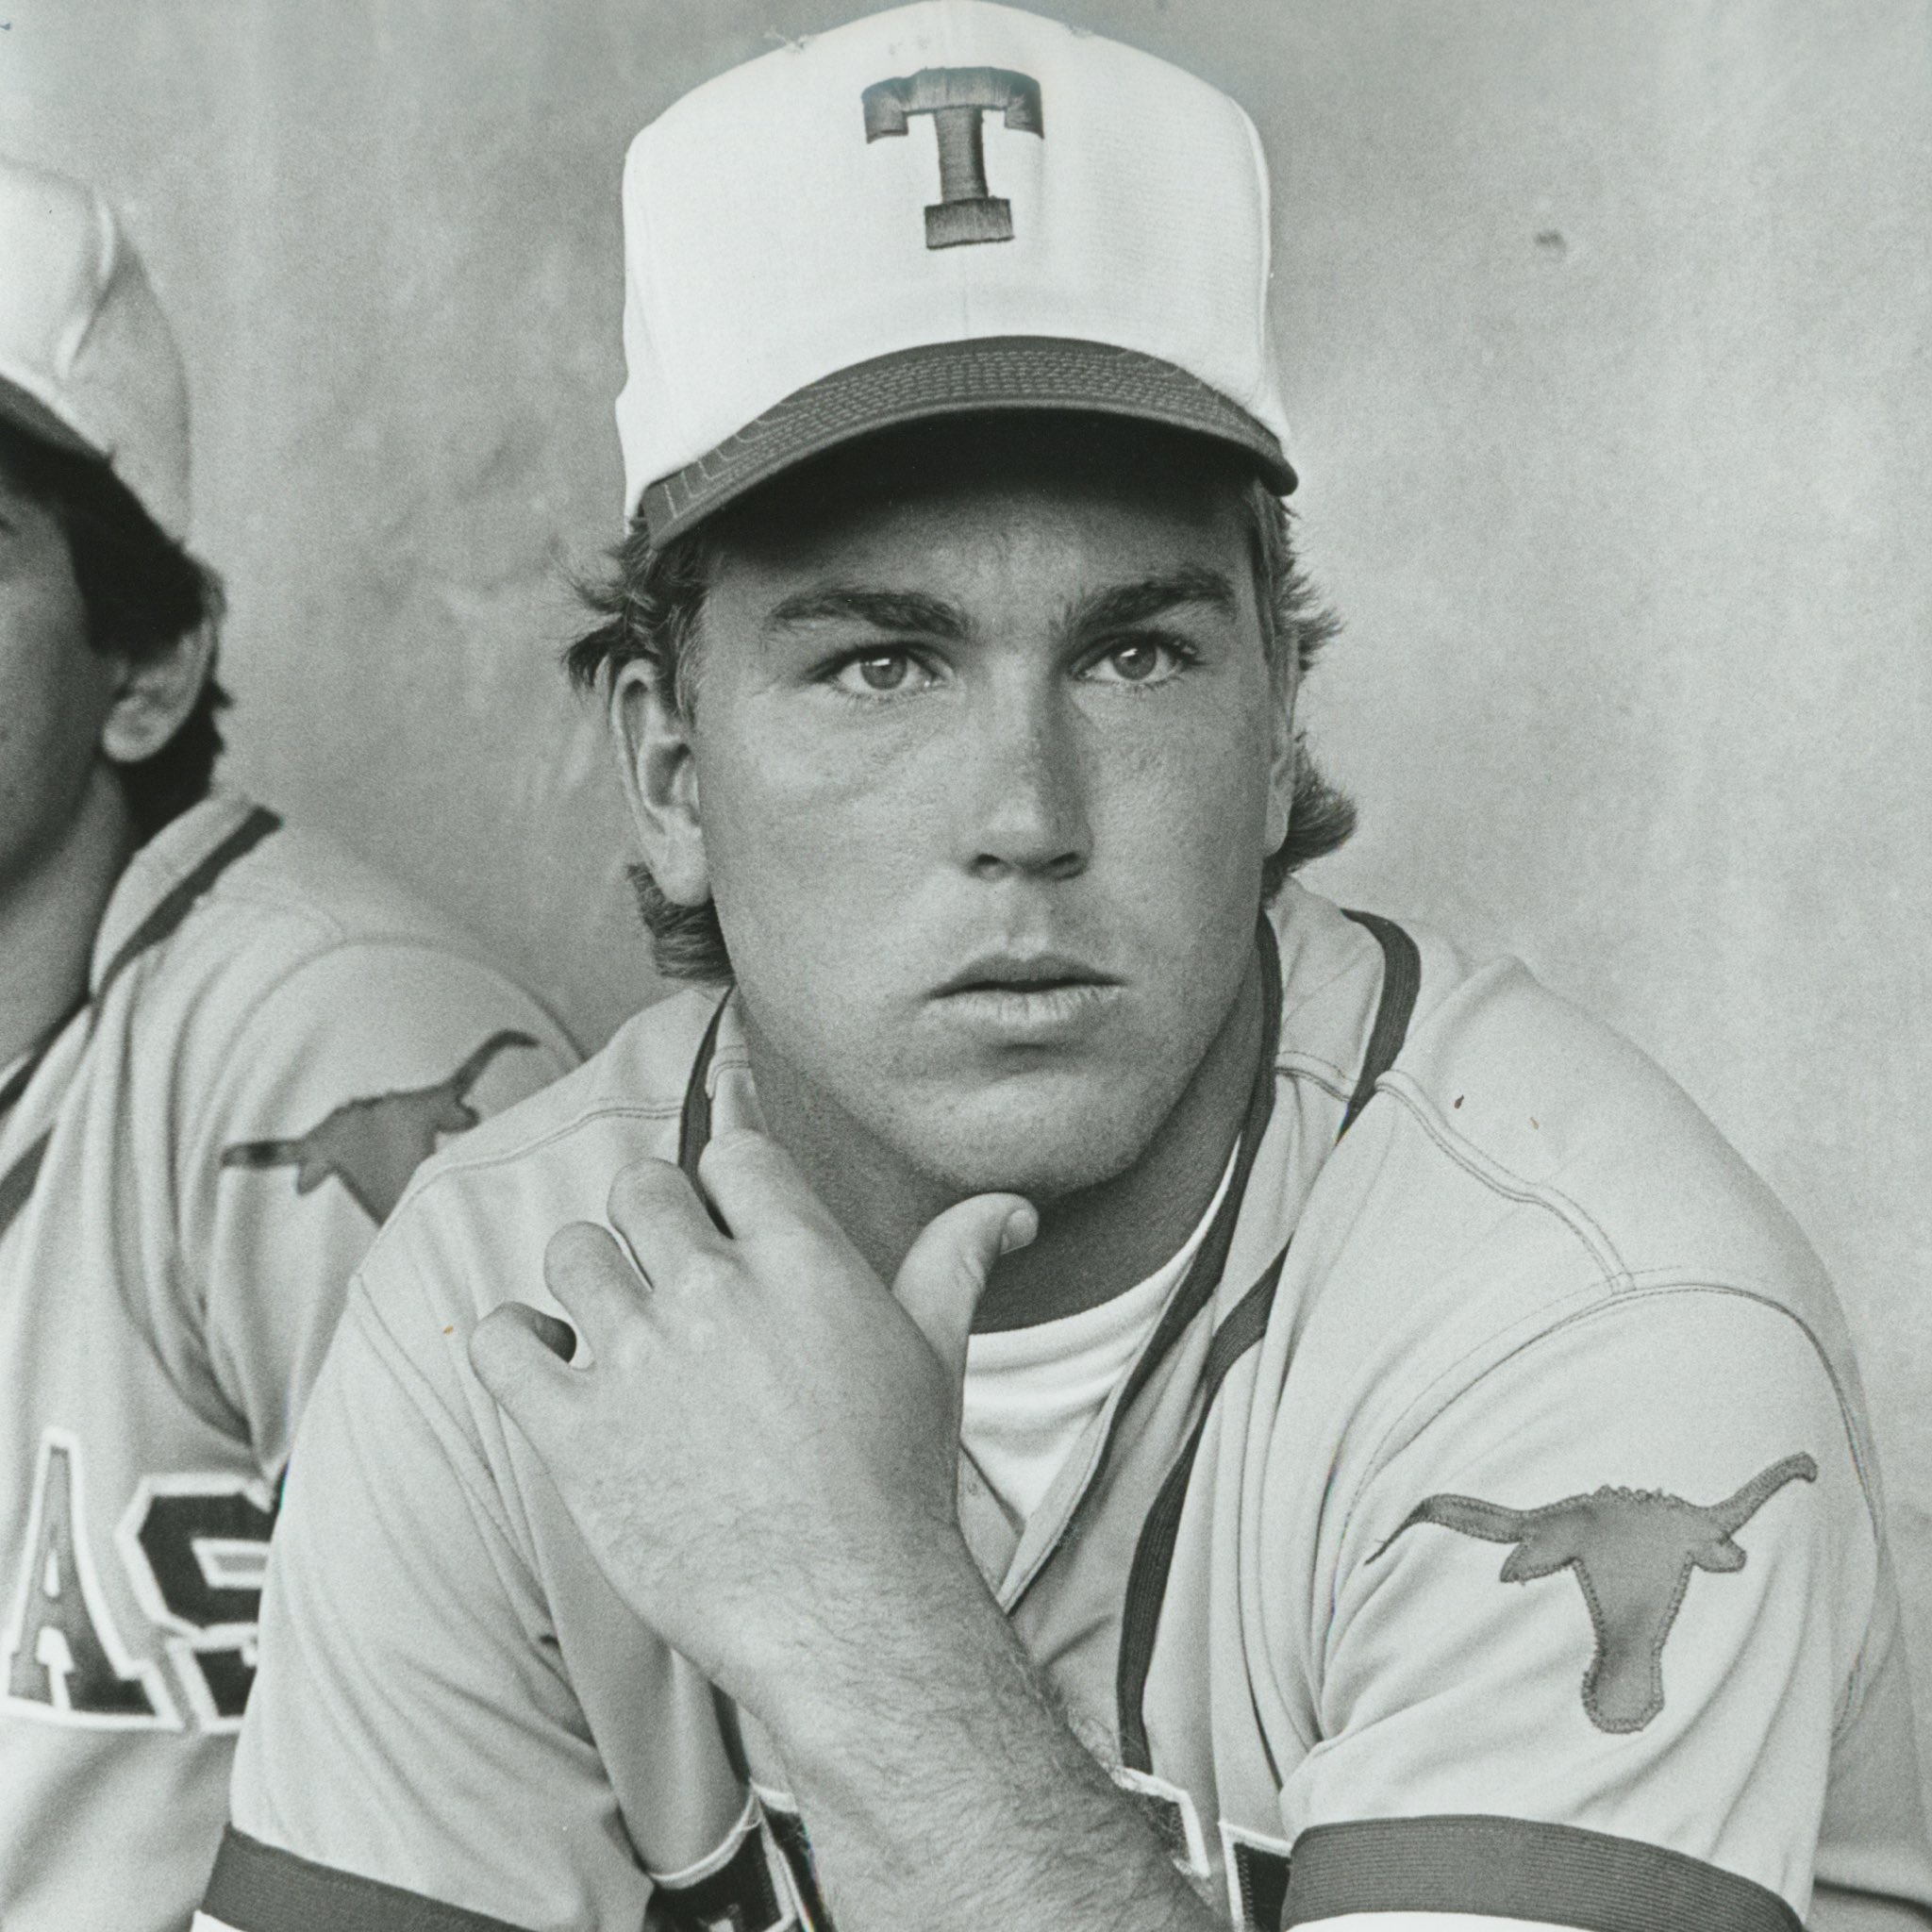 Texas Baseball on X: 🔜 🔜 🔜 but not 🔜 enough. #HookEm https